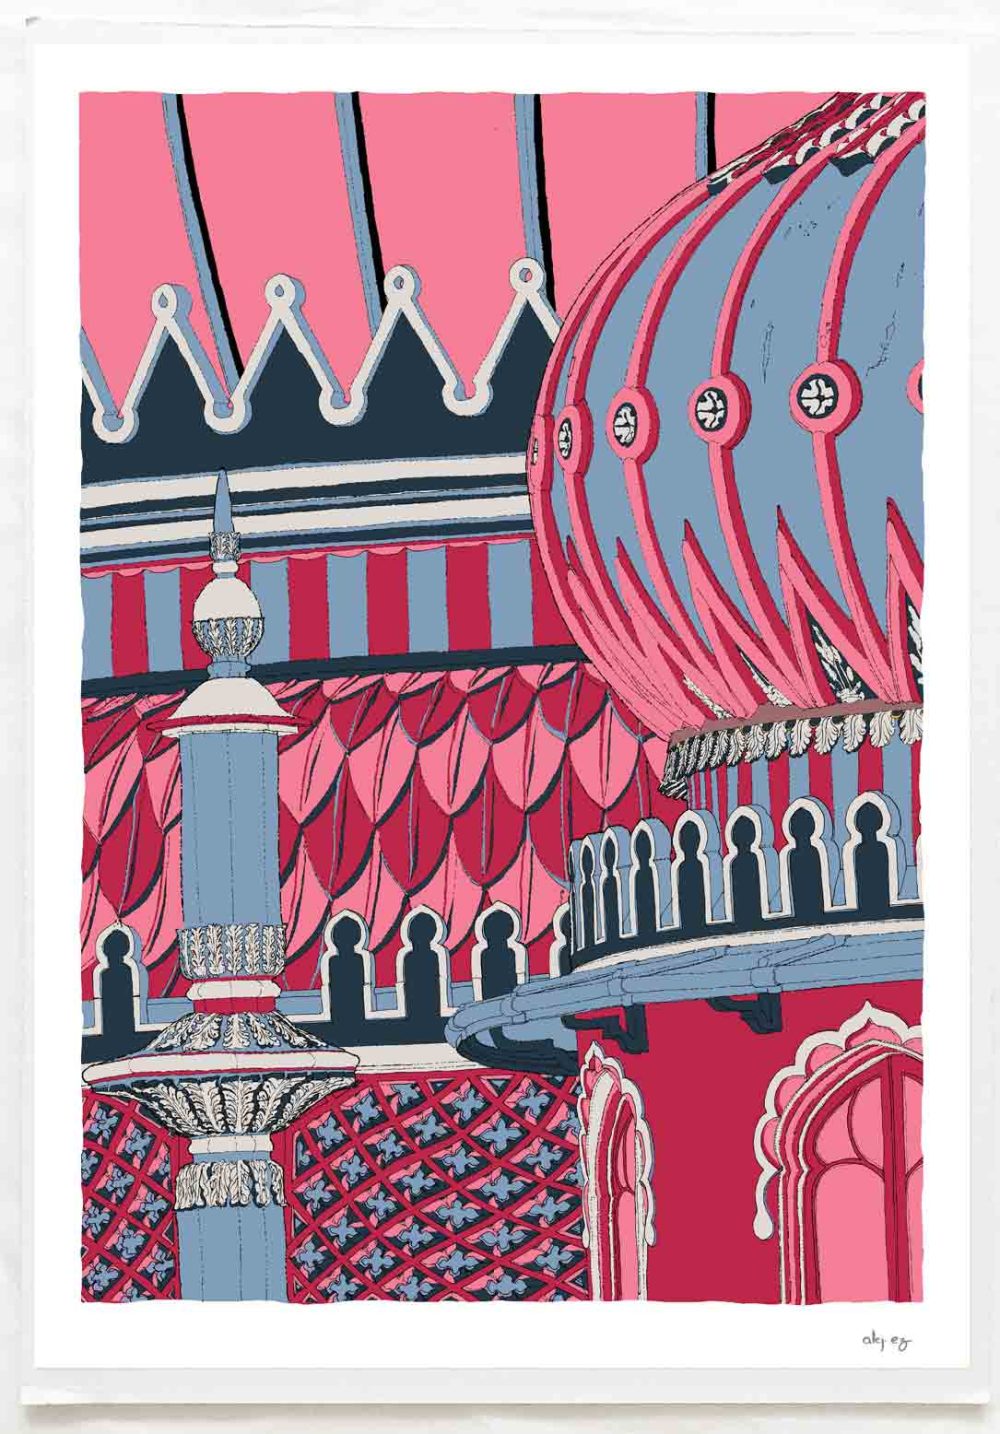 Art print by alej ez titled Regency Song Brighton Royal Pavilion Finial and Domes